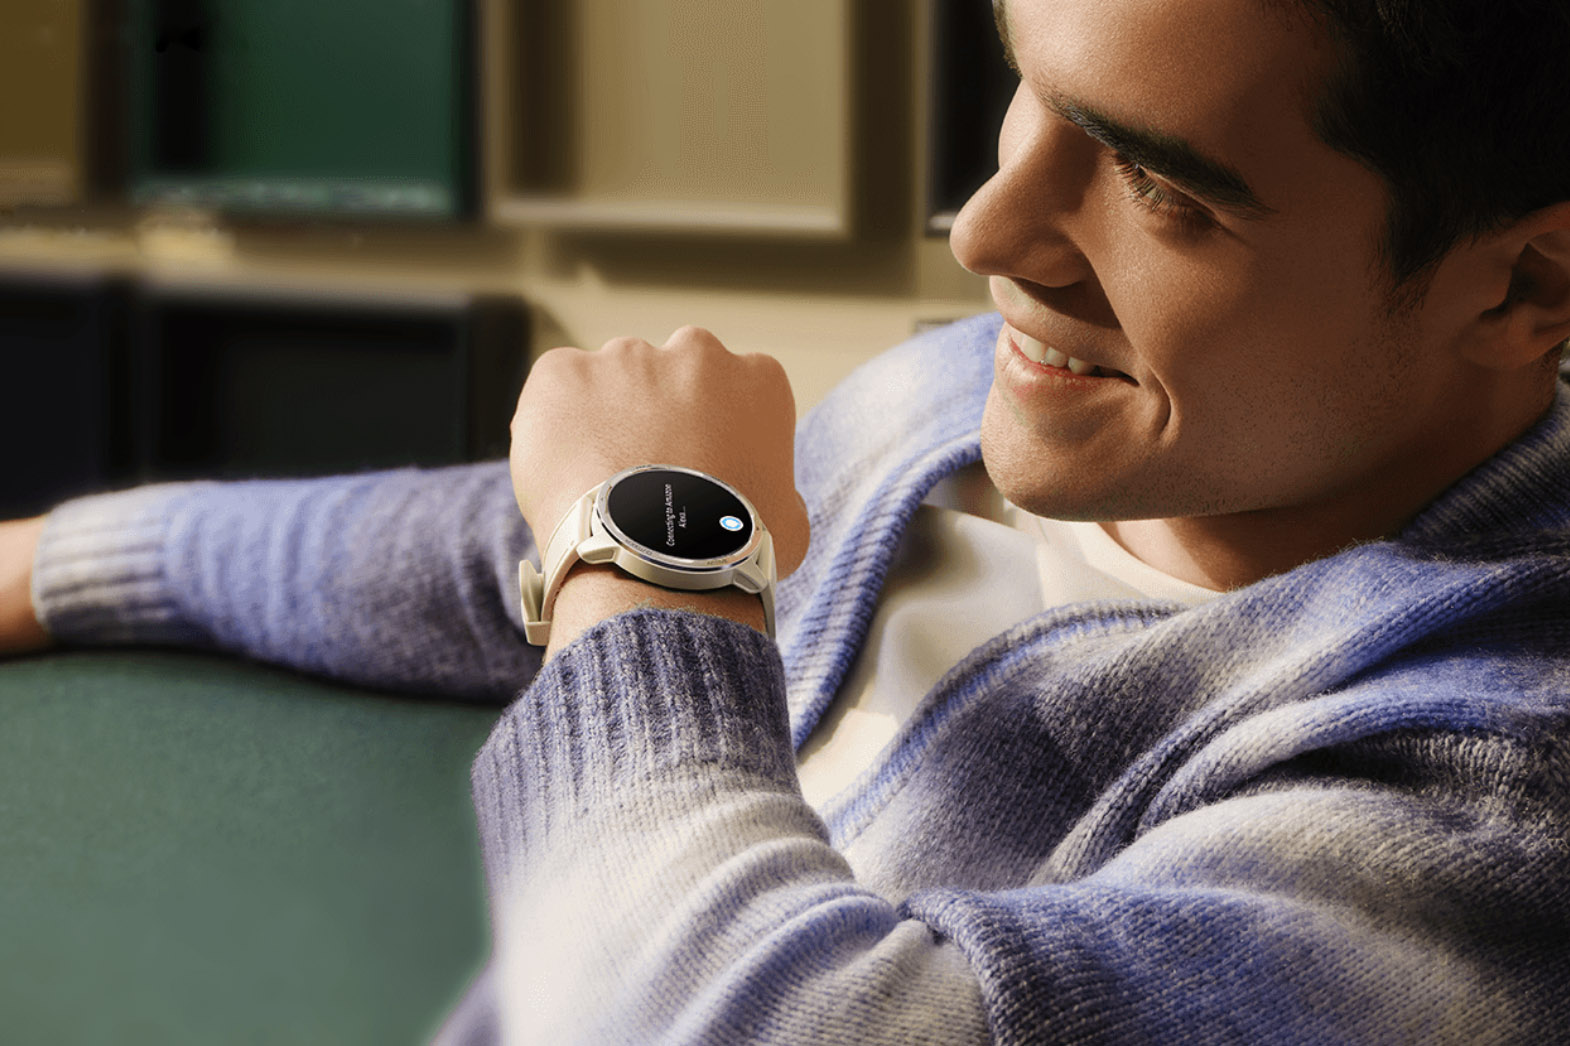 Open Box, Unused Boat Xtend Smart Watch with Alexa Built-in, 1.69” HD  Display